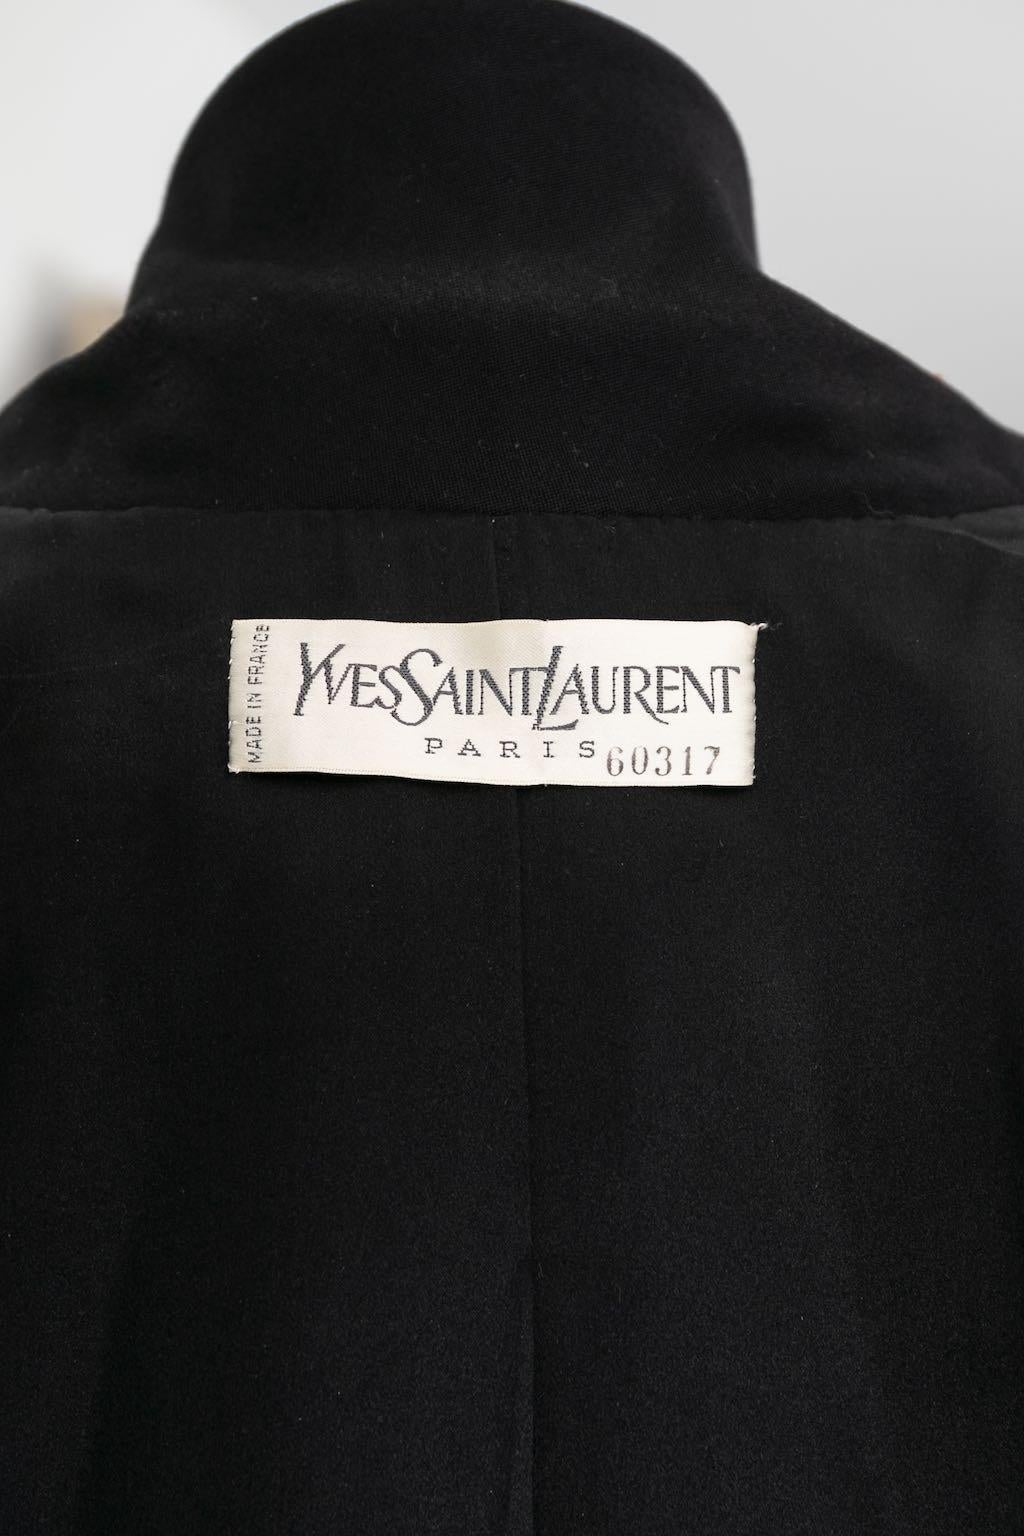 Yves Saint Laurent Haute Couture Black Skirt and Jacket Set, circa 1981/1982 2